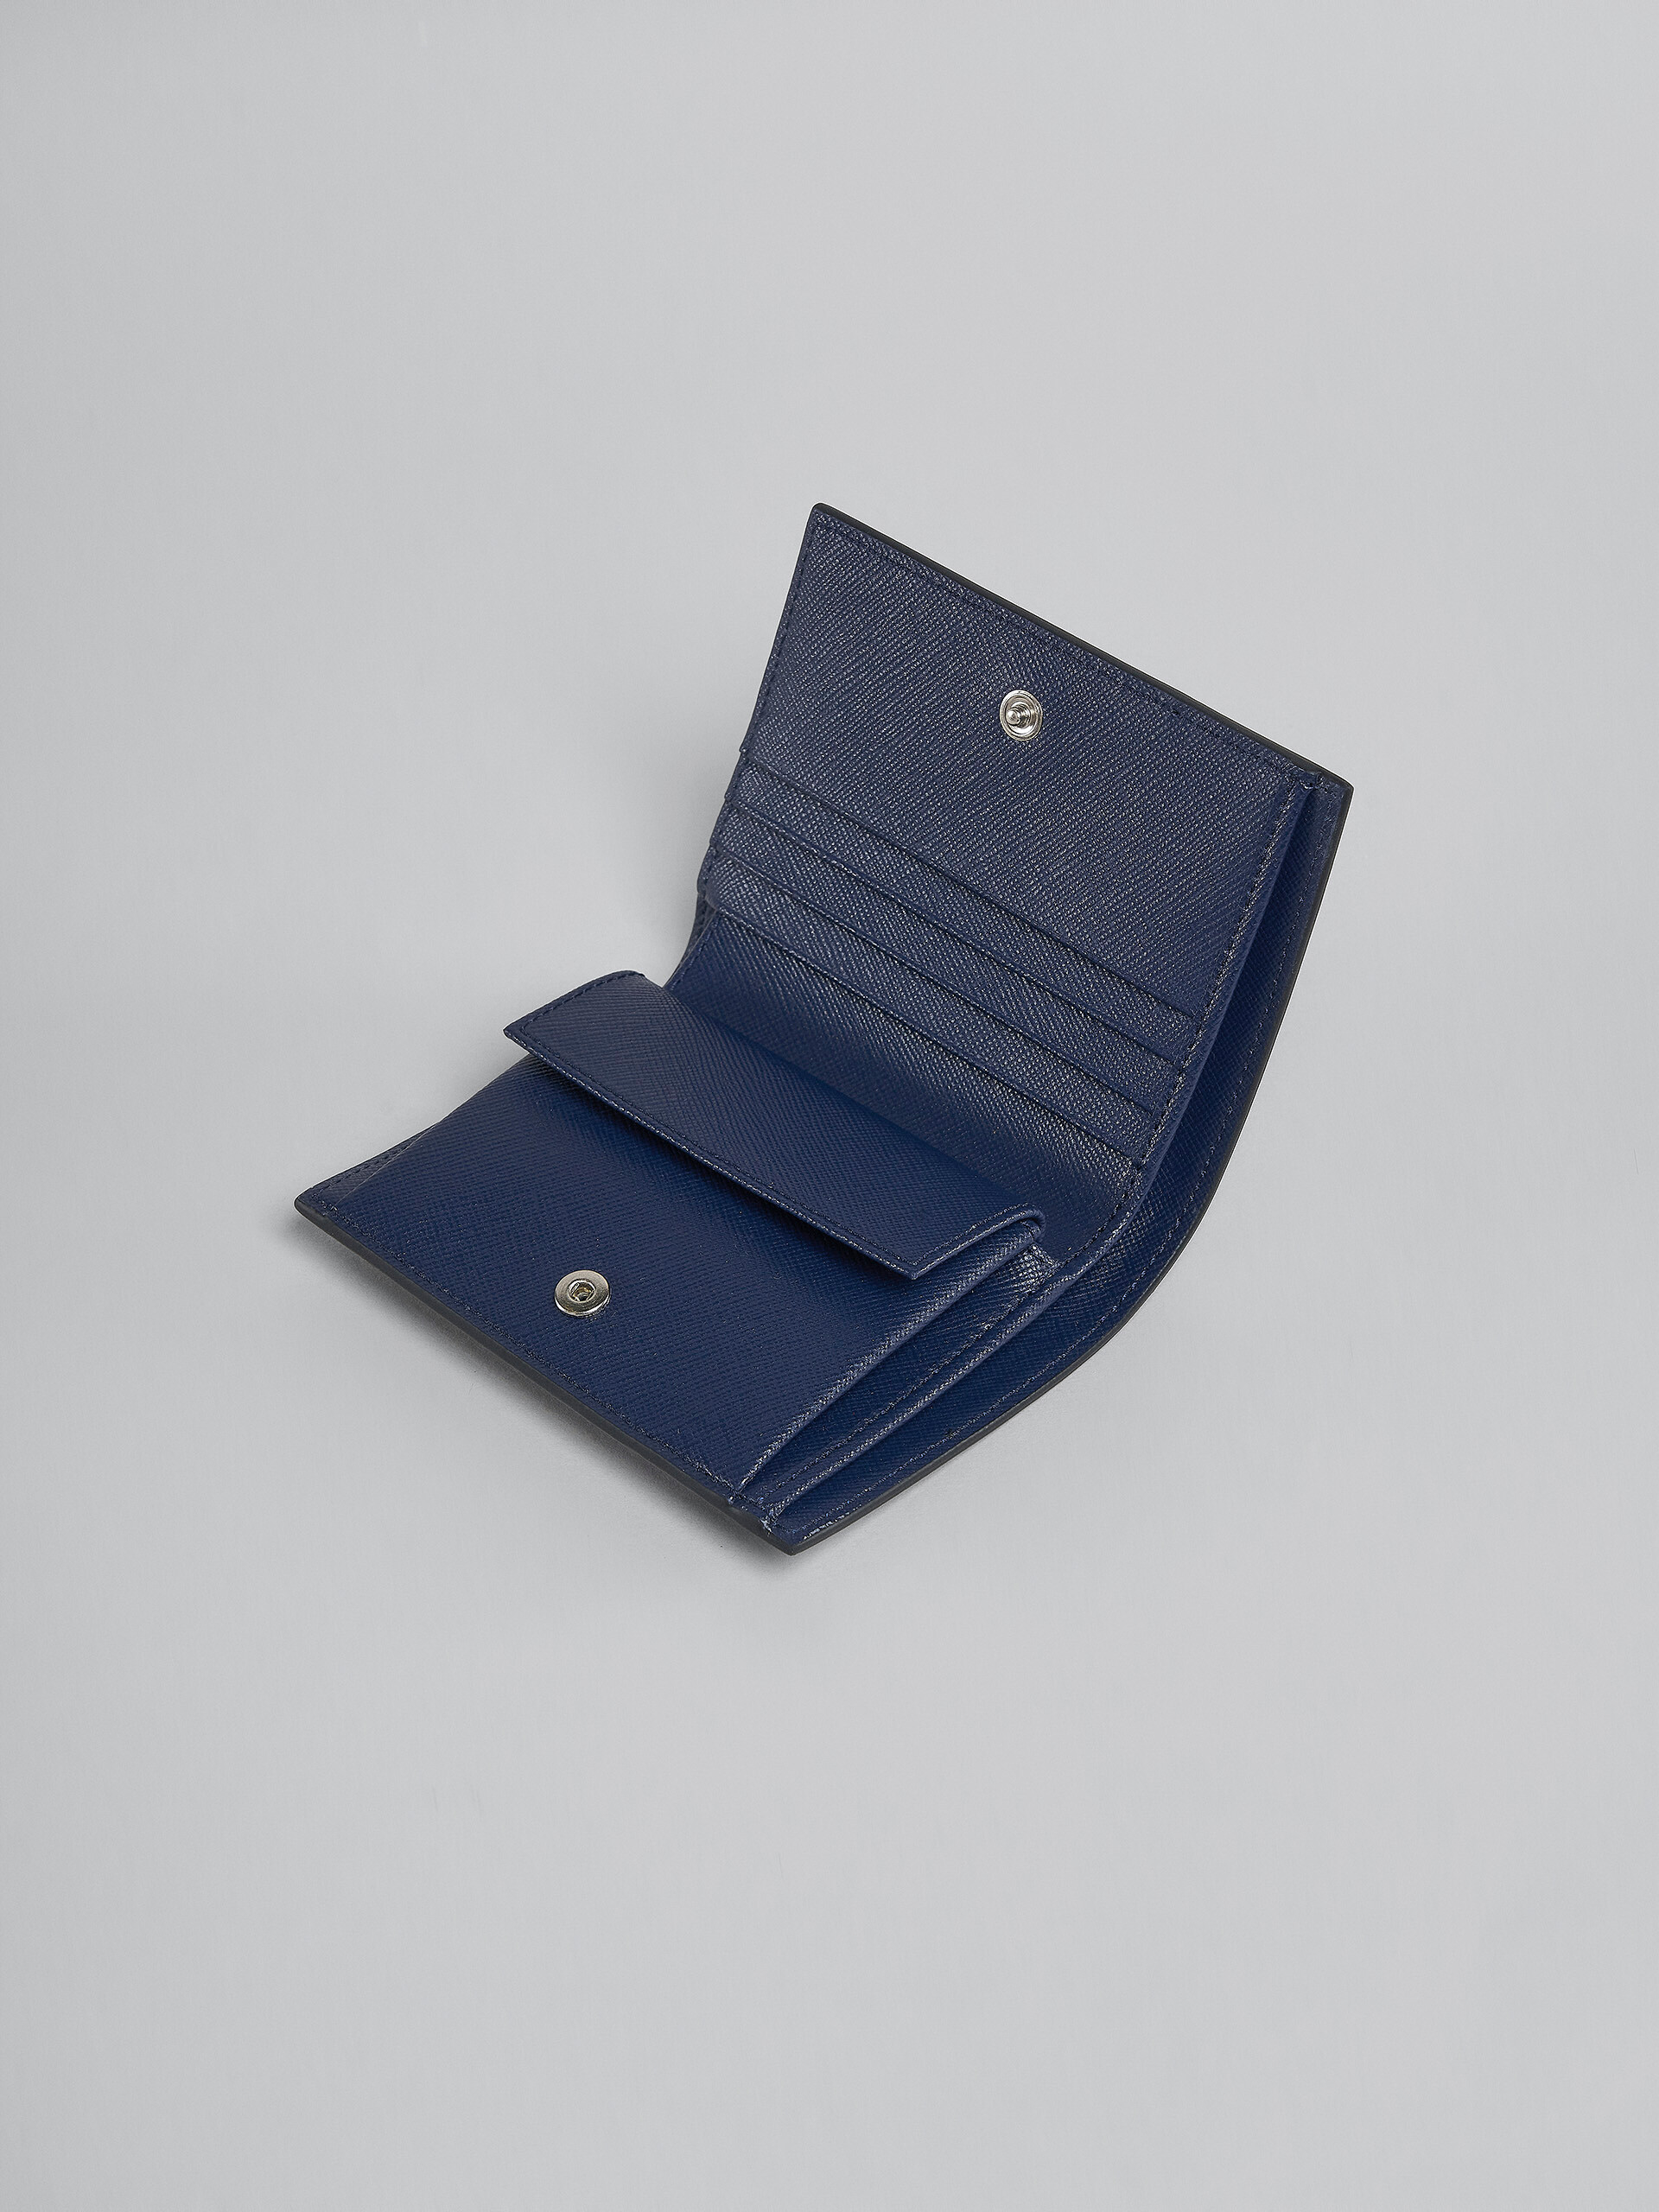 Blue saffiano leather bi-fold wallet - Wallets - Image 4